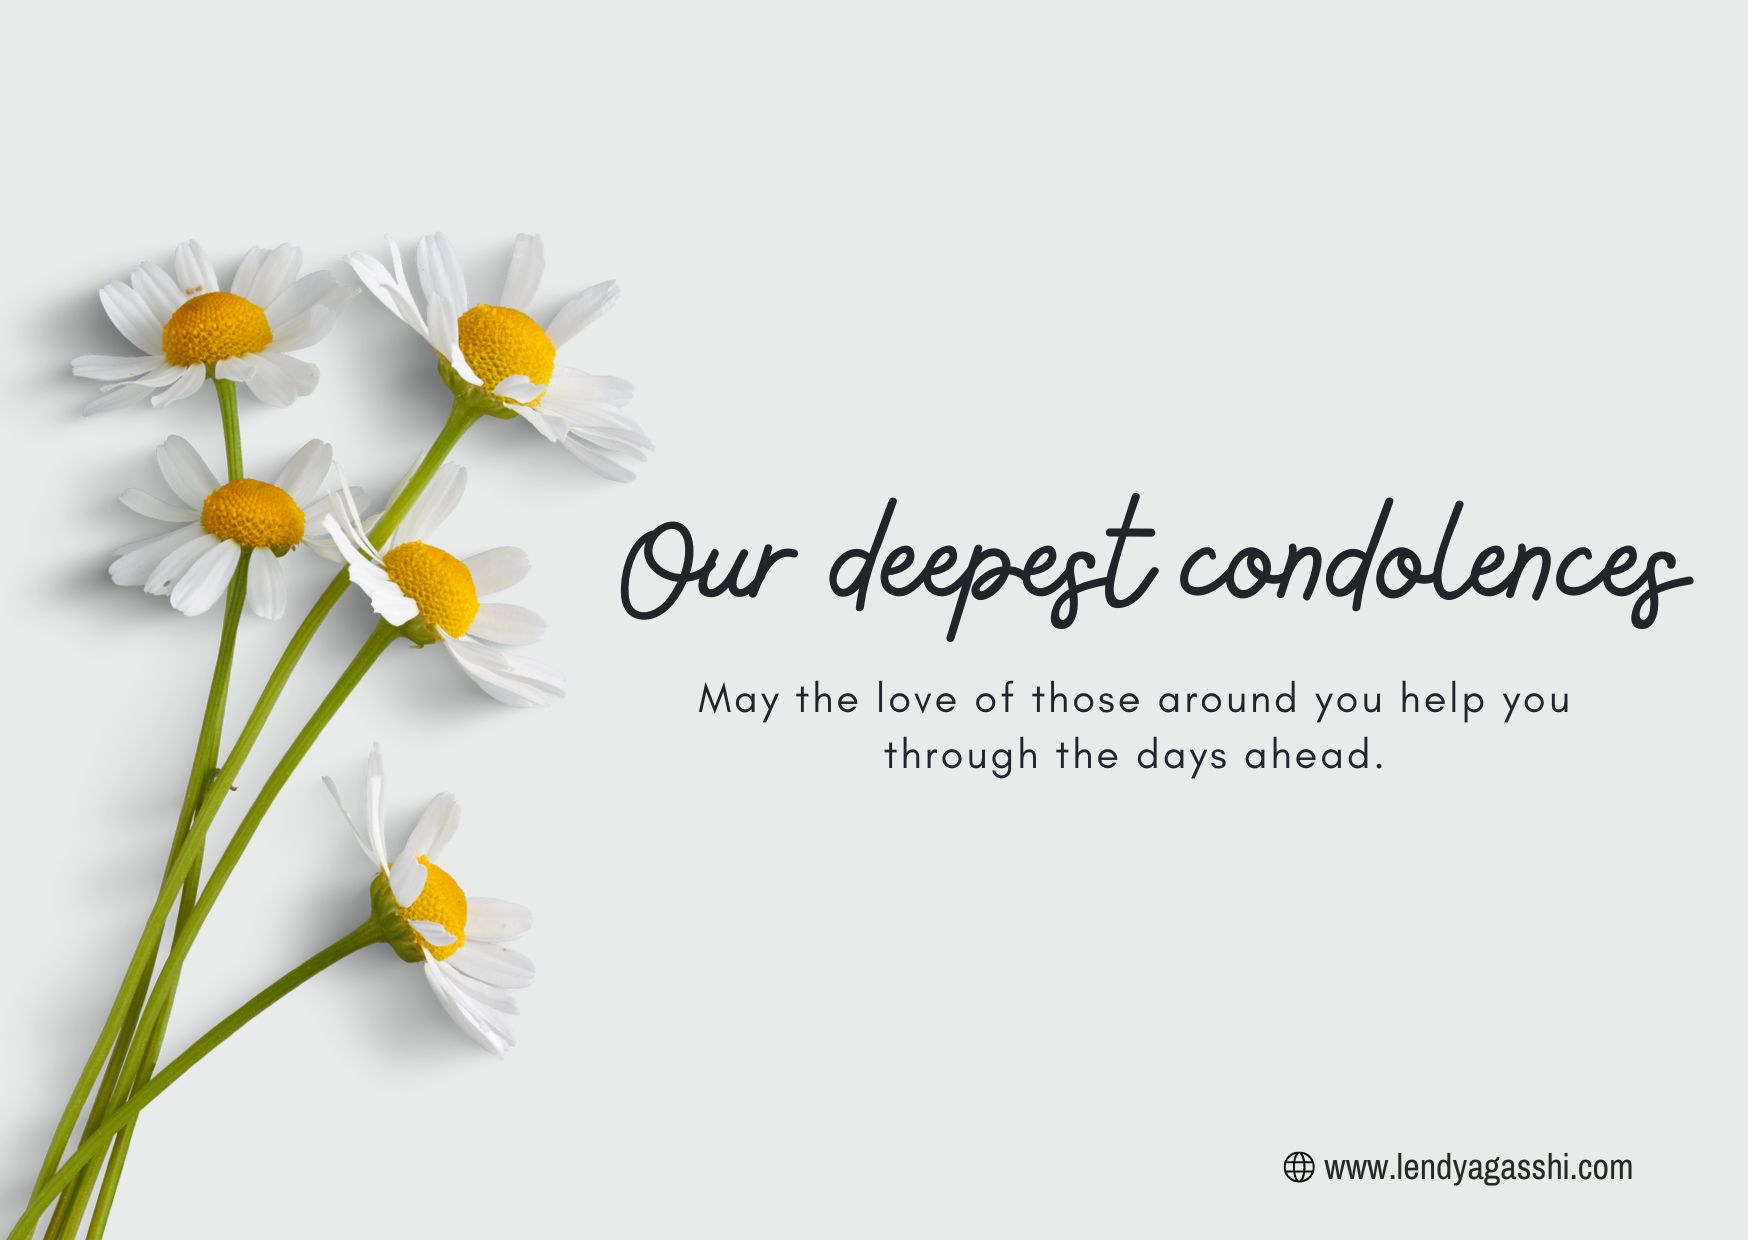 deepest condolences to 이태원 참사 희생자 (Itaewon Disaster Victims)